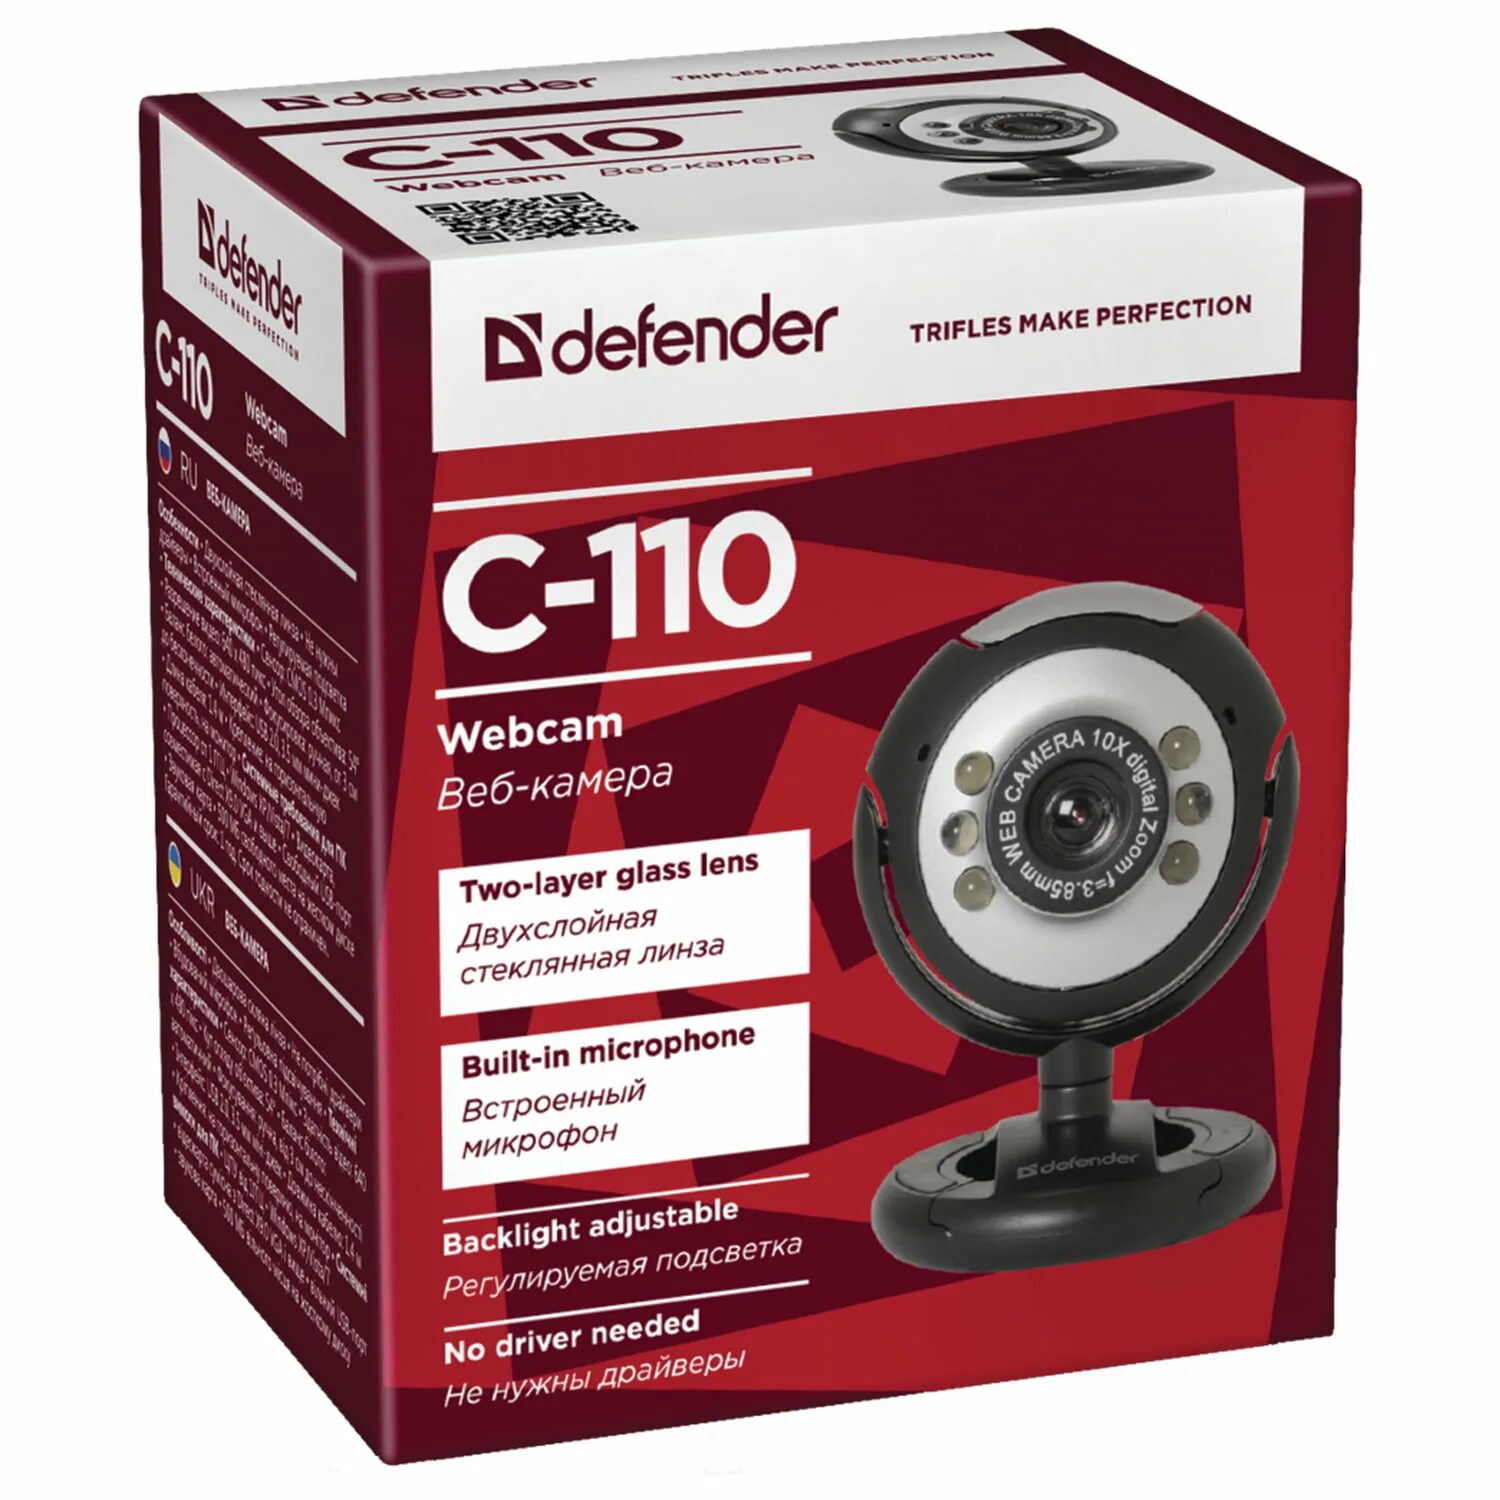 Defender c 110. Web-камера Defender c-110. Веб-камера Defender c-110 (63110). Веб камера Defender c-110 черная. Веб камера Дефендер с 110.